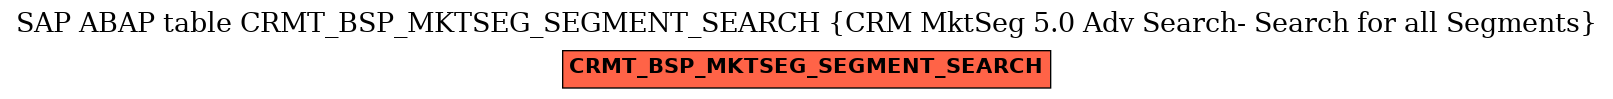 E-R Diagram for table CRMT_BSP_MKTSEG_SEGMENT_SEARCH (CRM MktSeg 5.0 Adv Search- Search for all Segments)